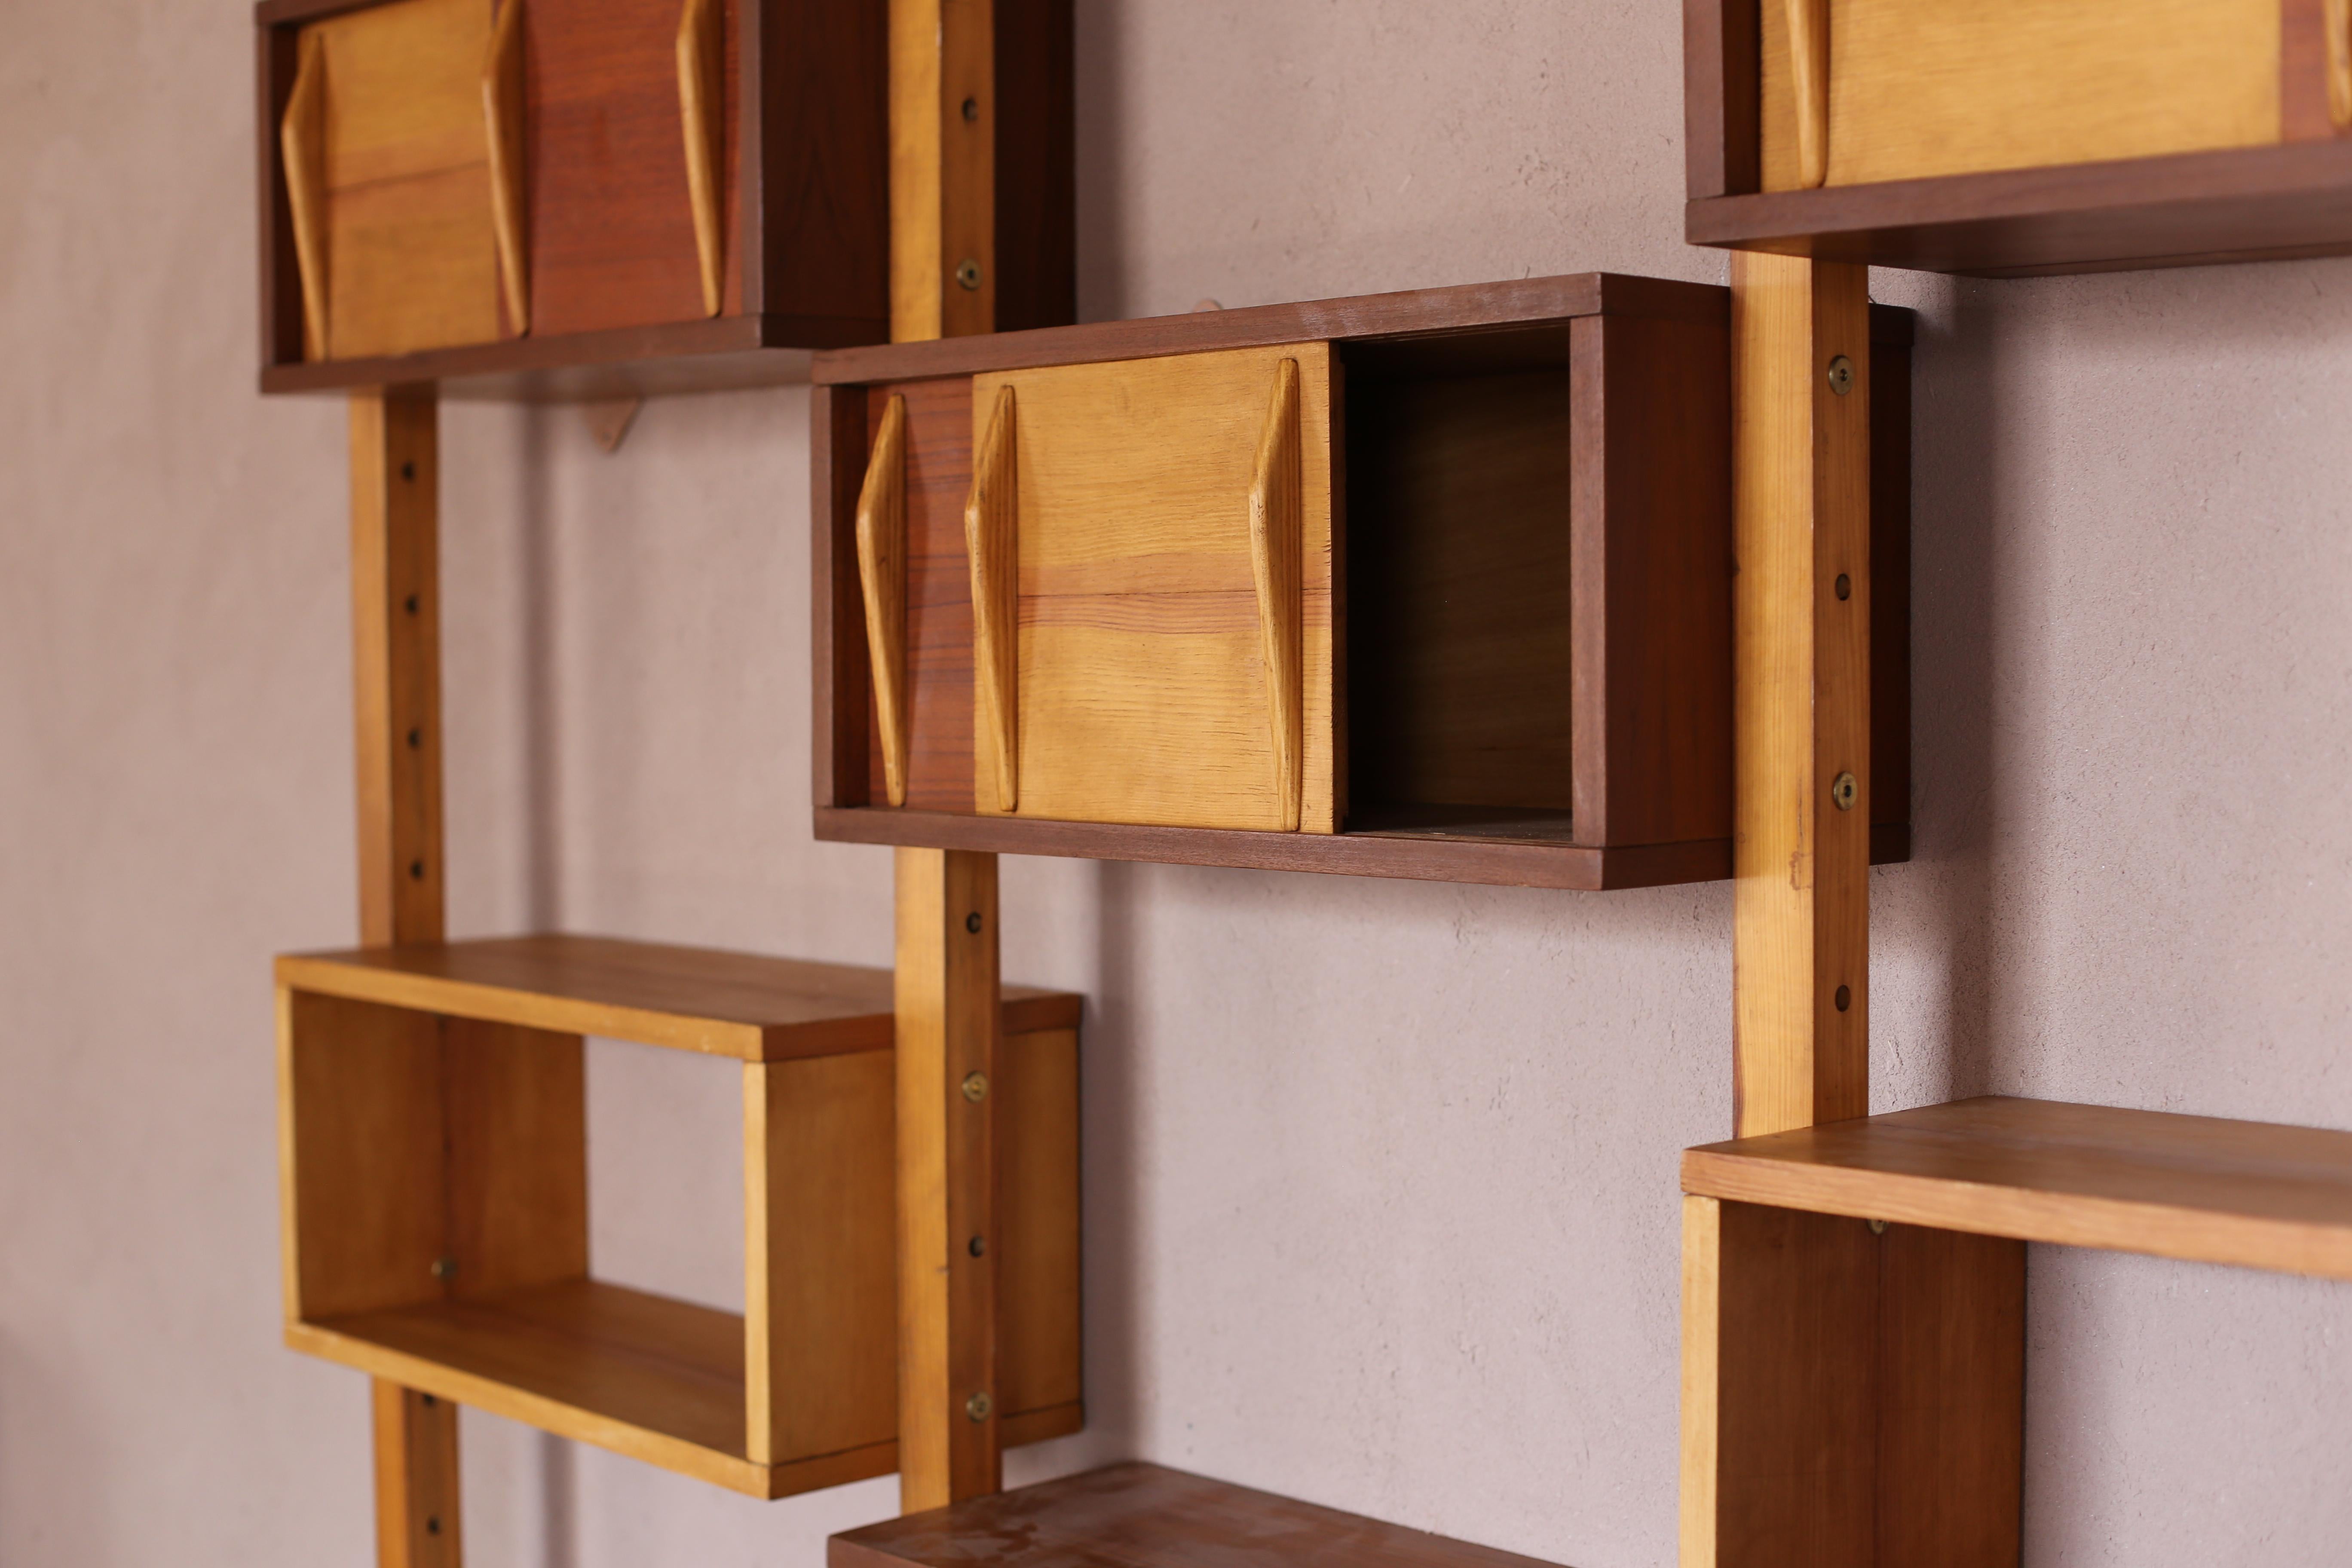 70s style shelves